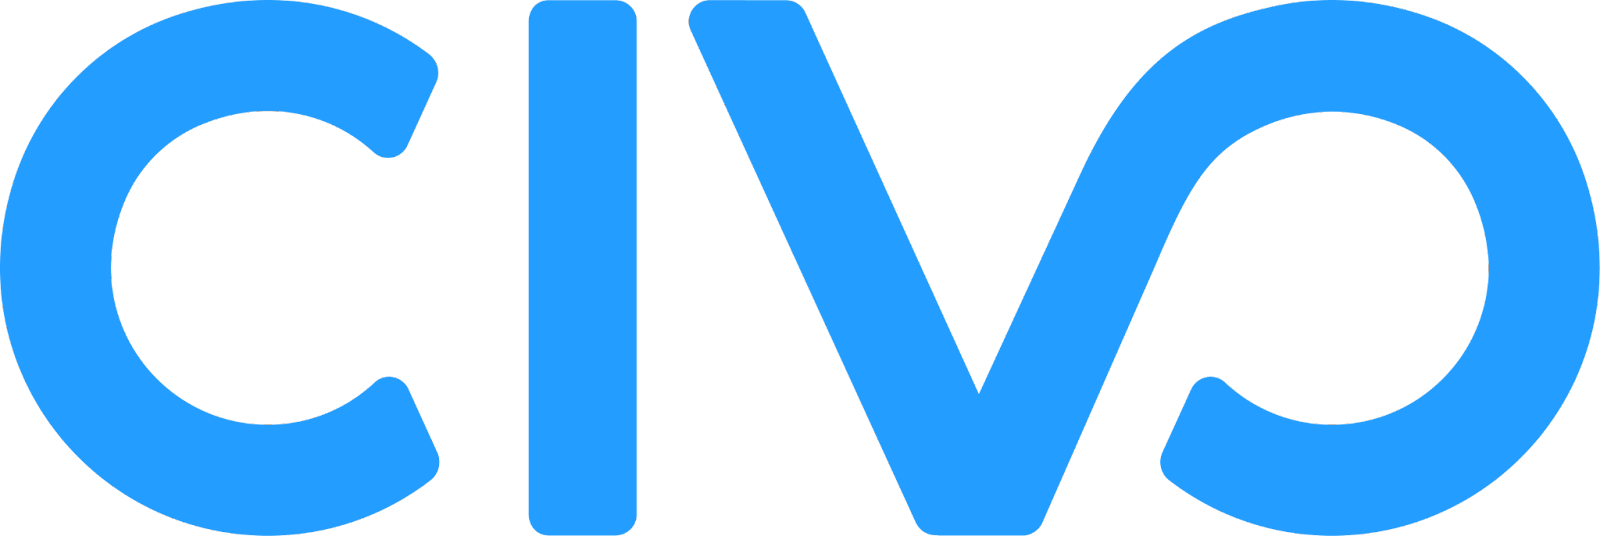 Civo logo